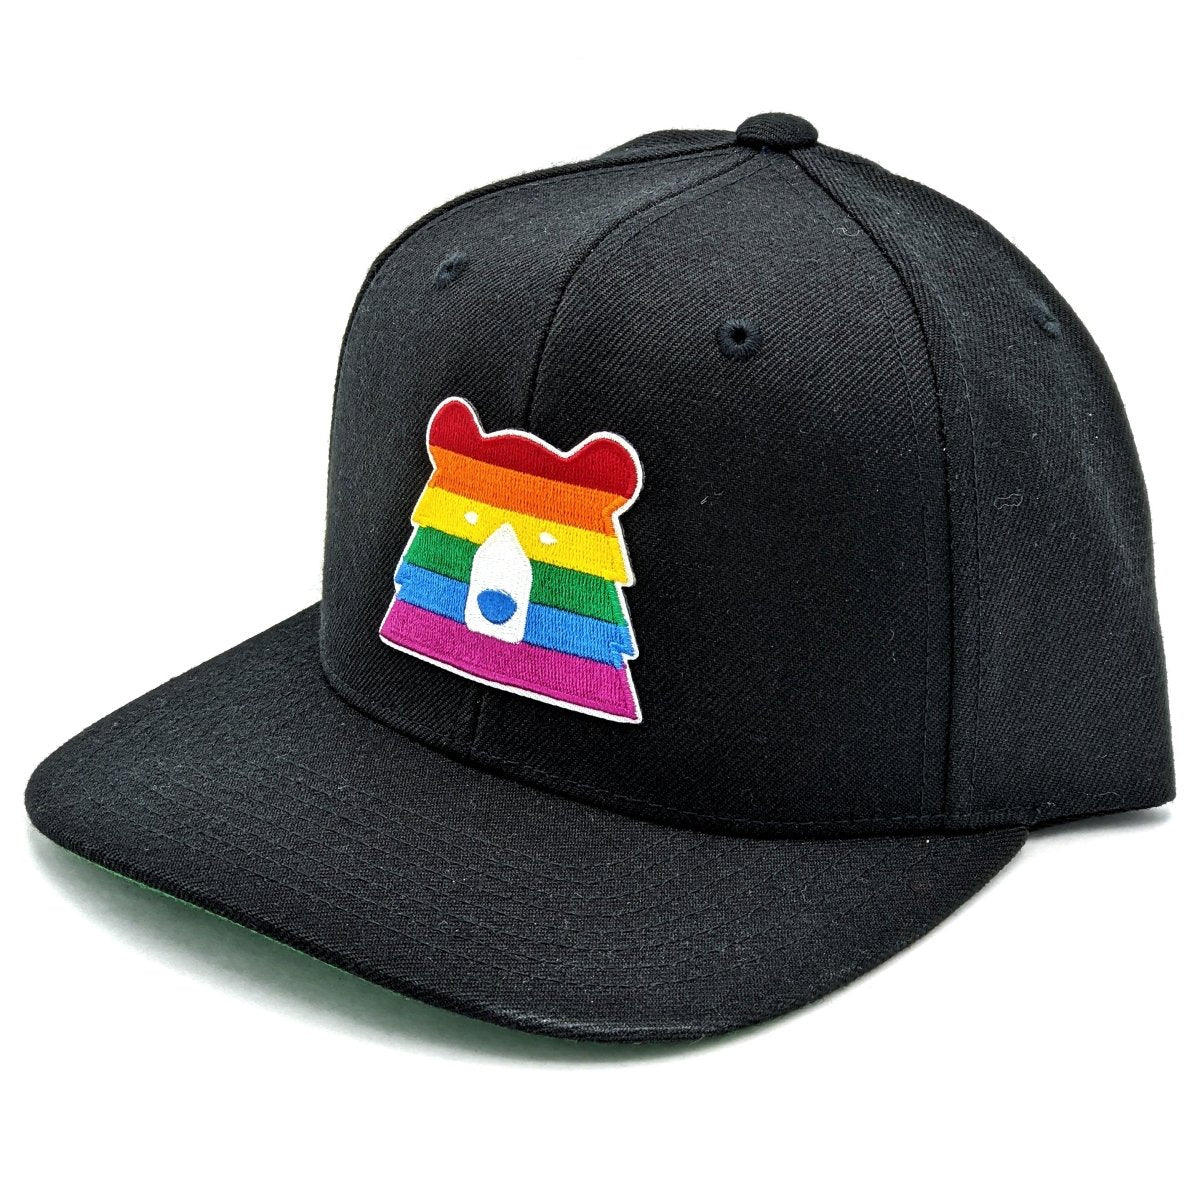 Snapback Hat - Black w/Pride Bear - North Standard Trading Post